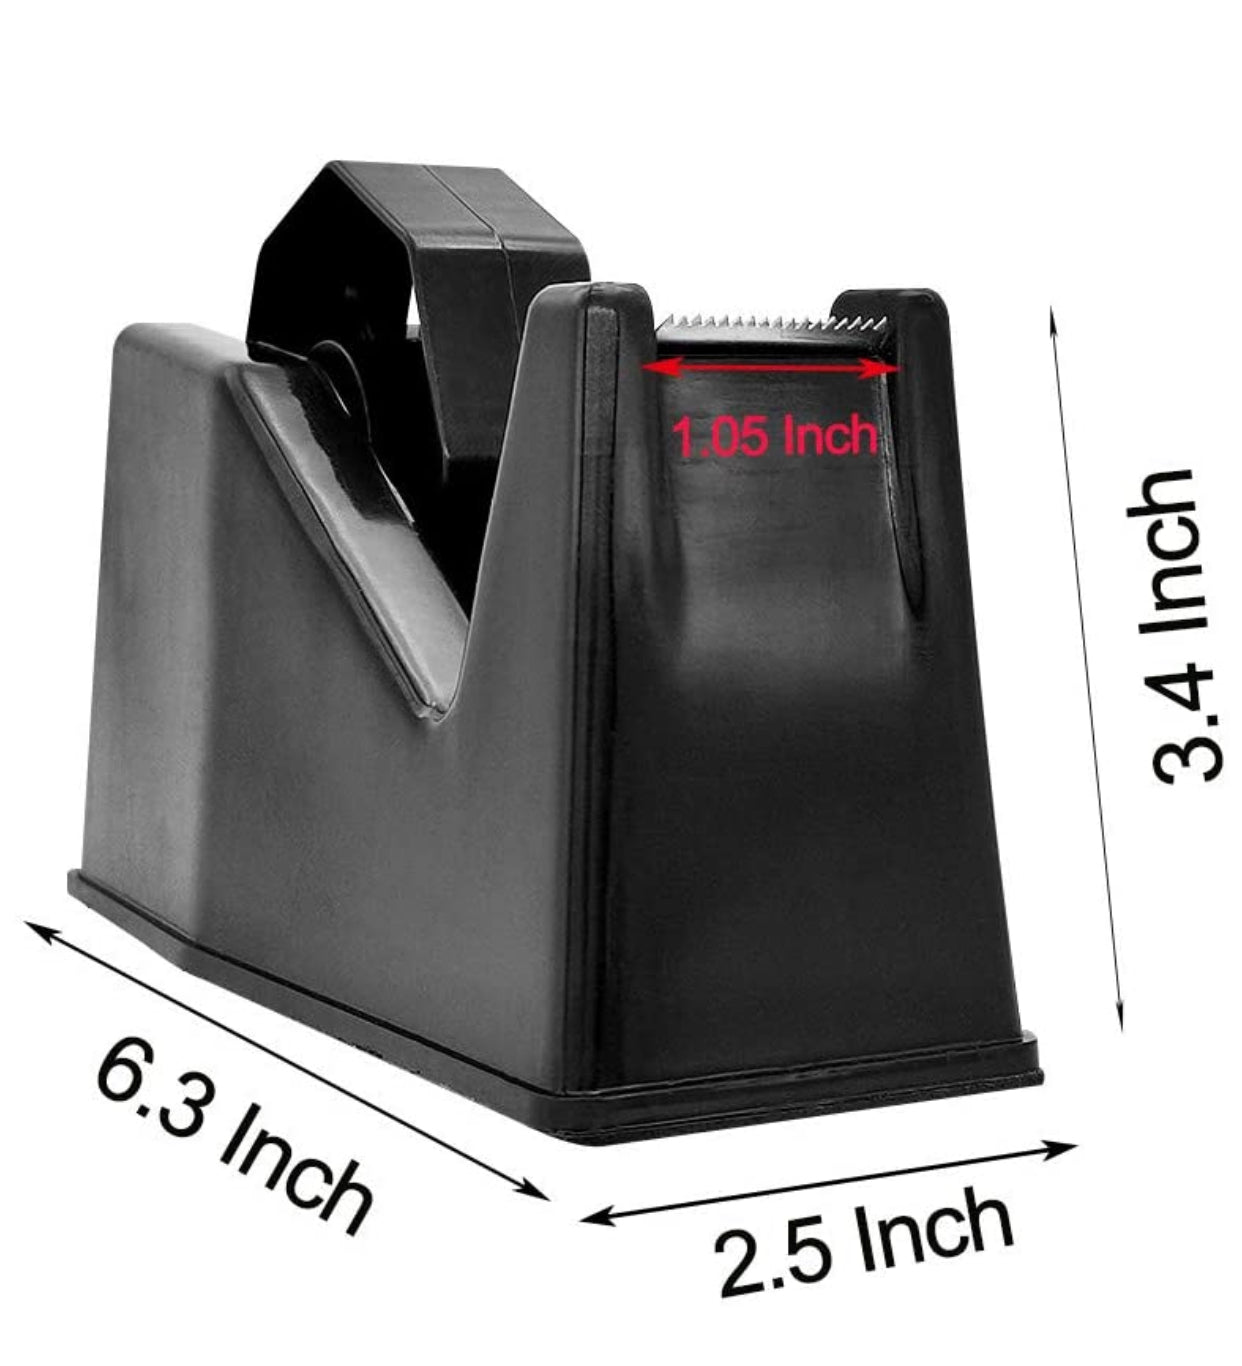 Sublimation Heat Tape Dispenser 6.3 x 2.5 x 3.4 Inch, Holder Fits